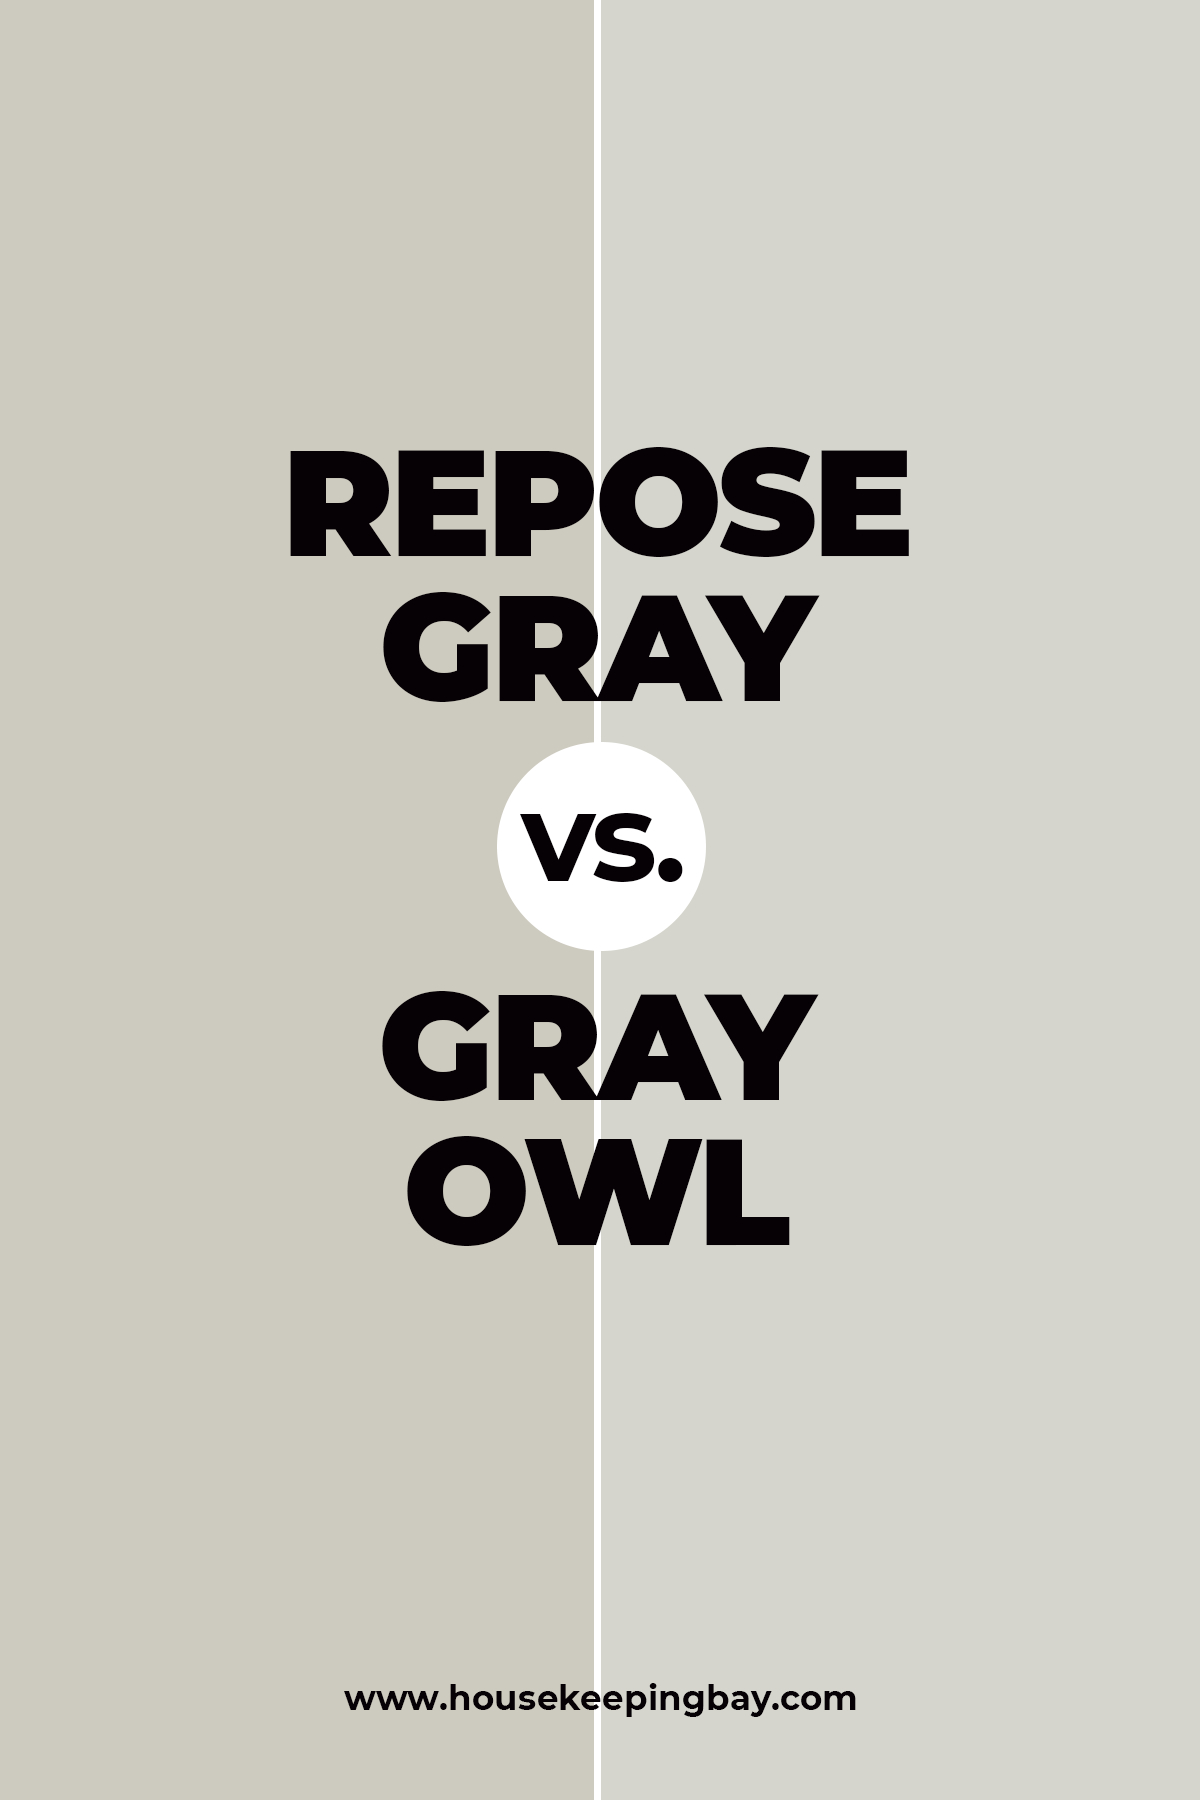 Repose gray vs gray owl